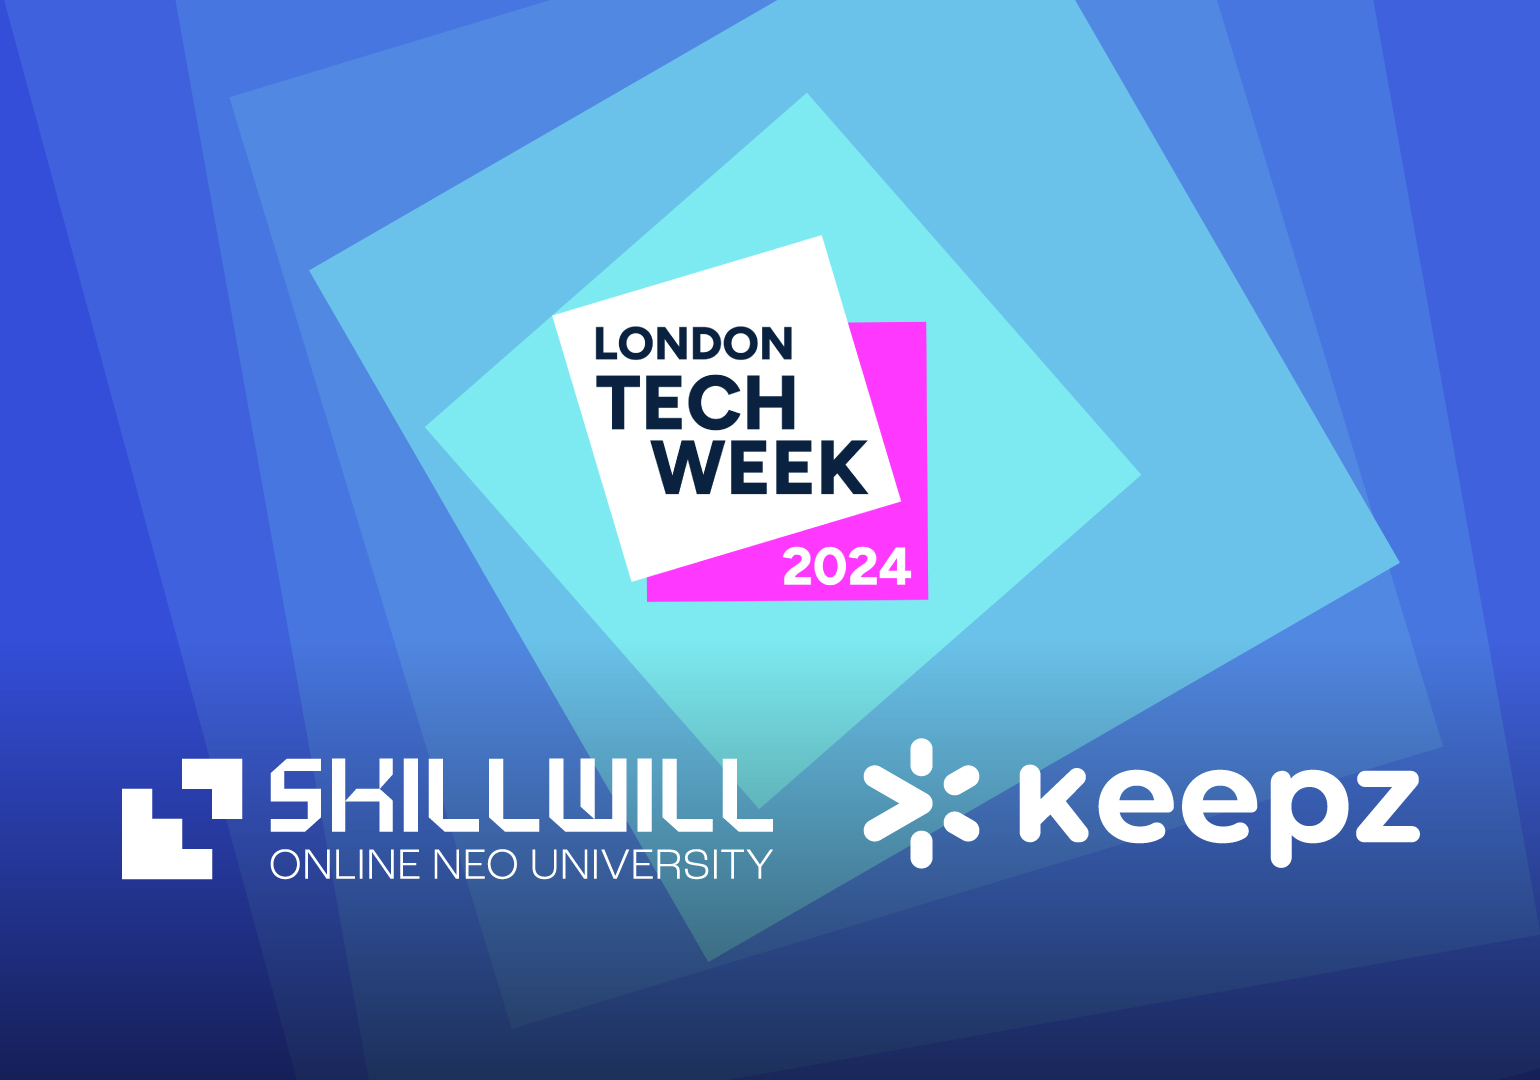 Skillwill-ი და Keepz-ი ლონდონის ტექნოლოგიურ კვირეულზე